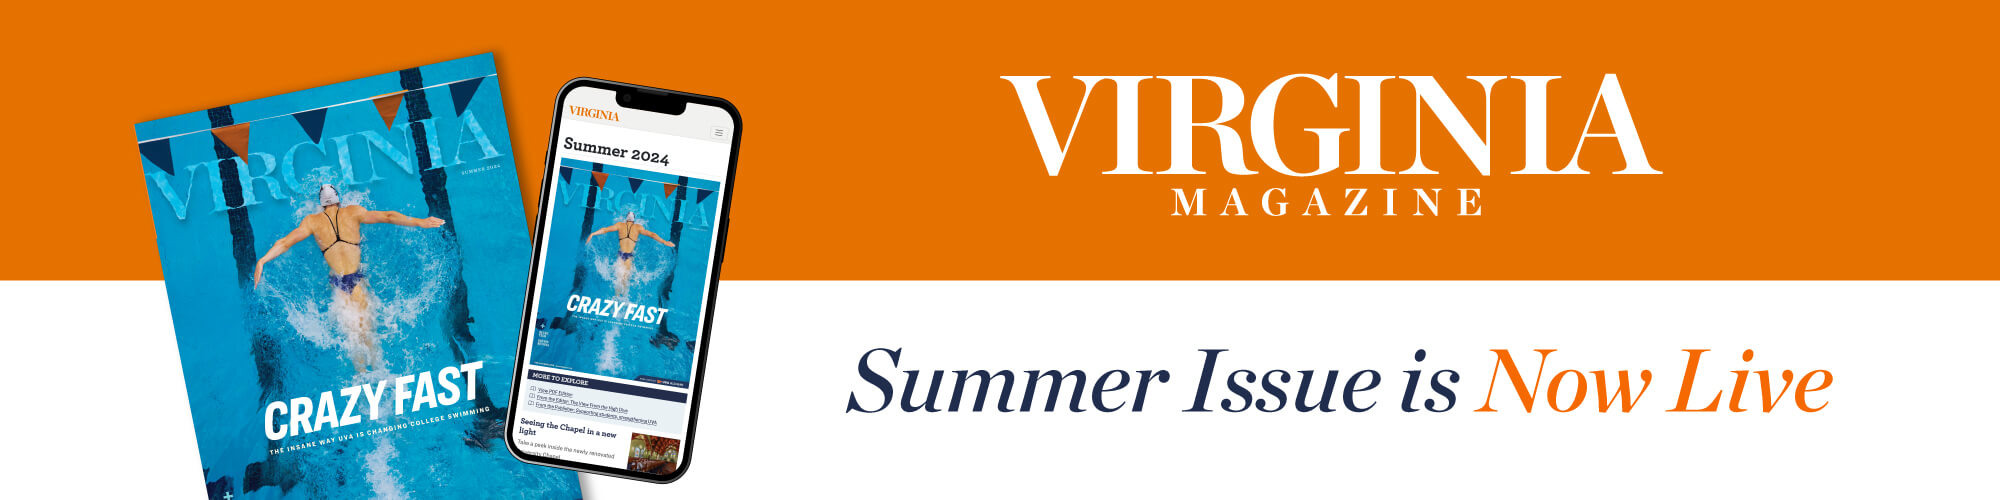 Your Summer Reading: Virginia Magazine!